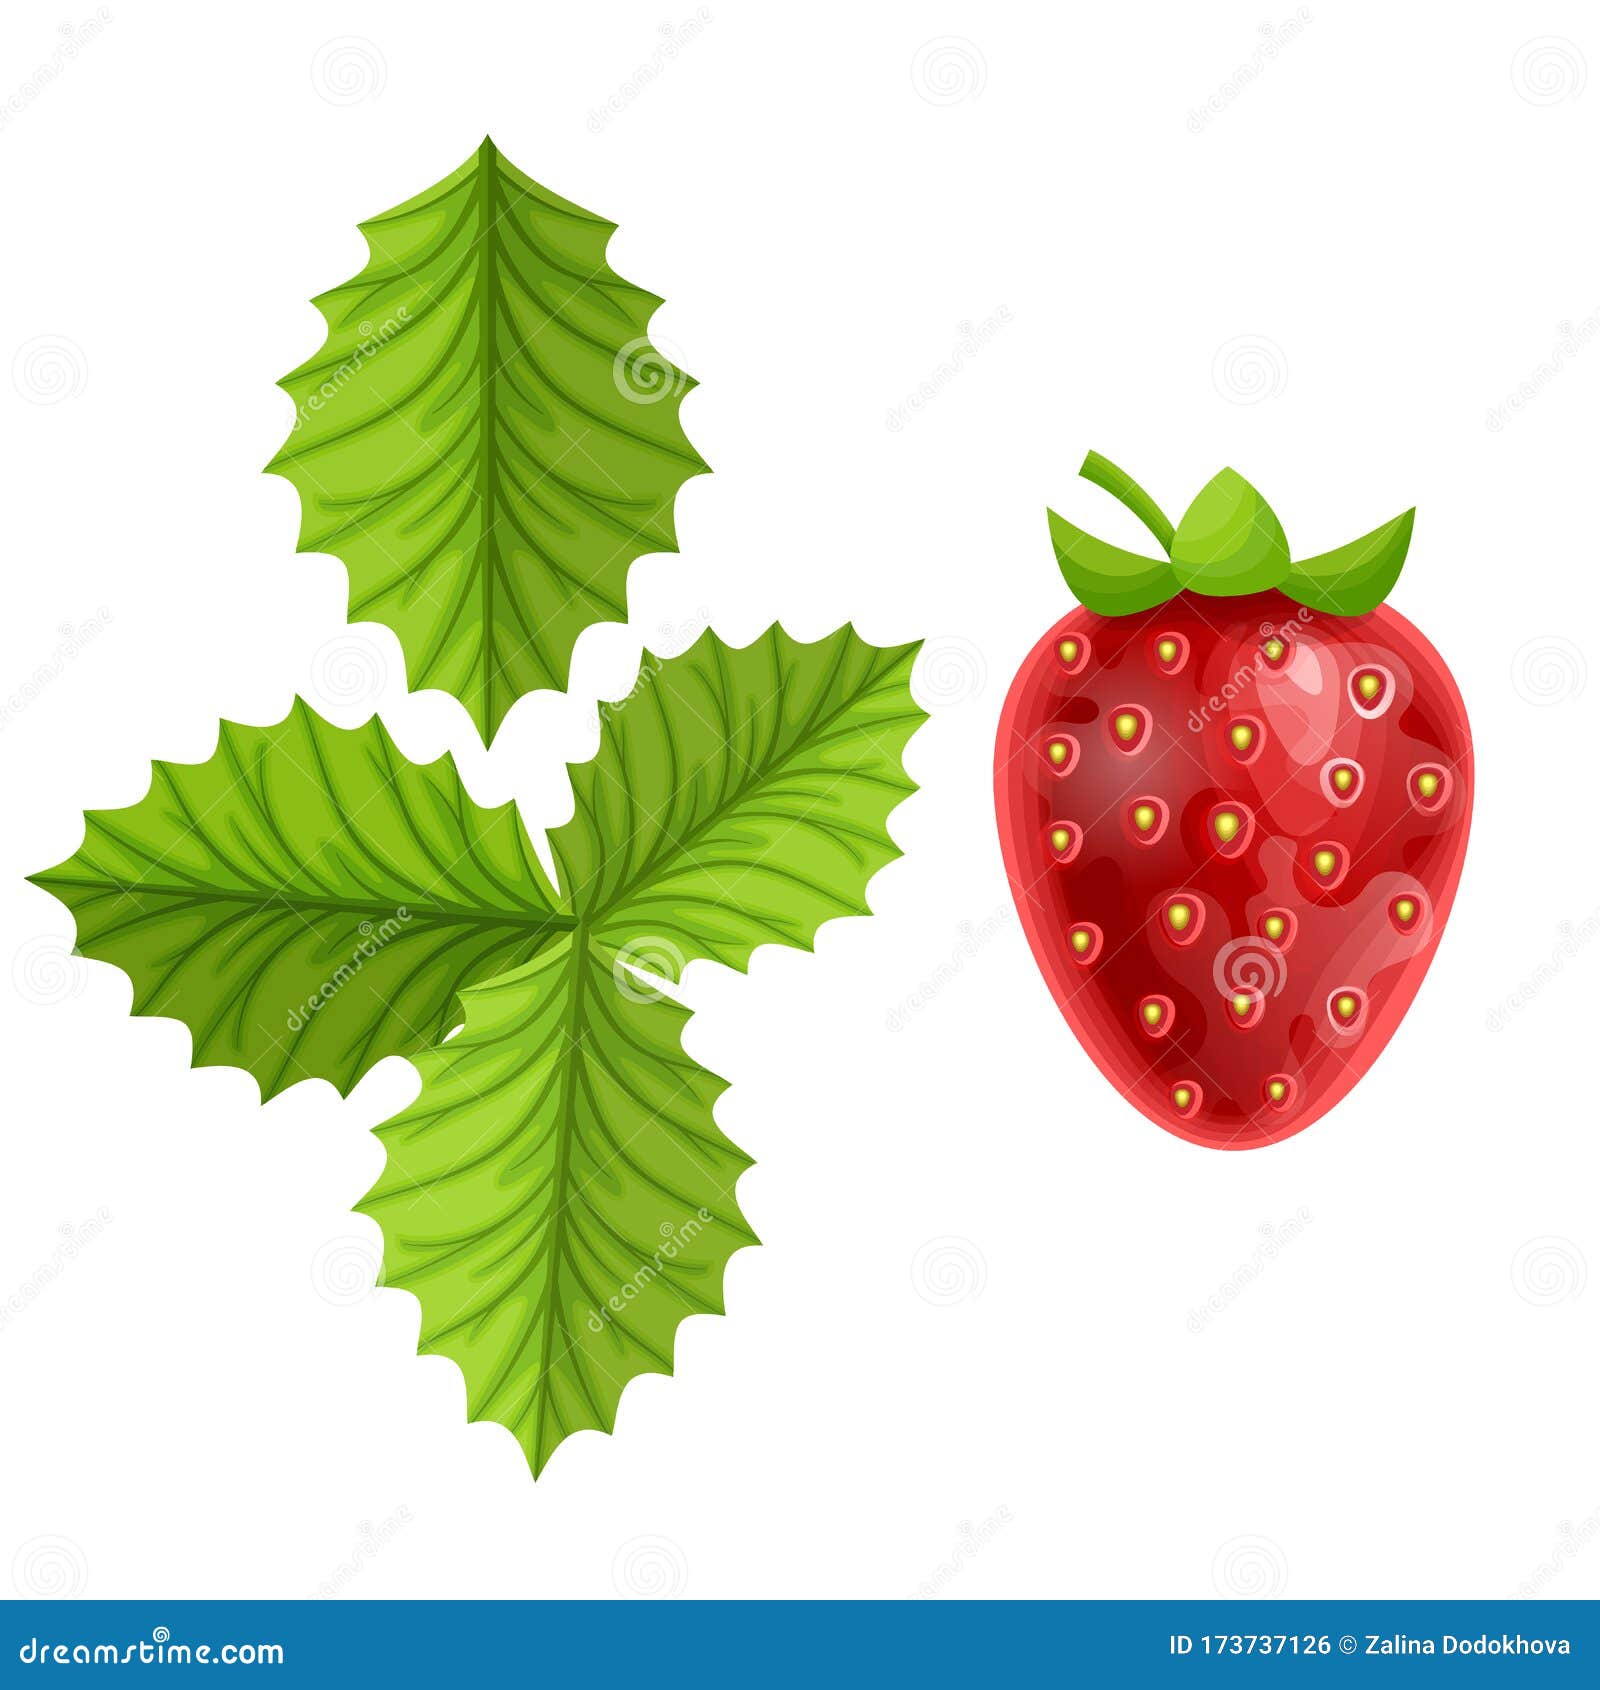 White Red Adult Size Cartoon Style Strawberries on White Background Fresh Fruit Pattern Image Lunarable Spring Apron Unisex Kitchen Bib with Adjustable Neck for Cooking Gardening